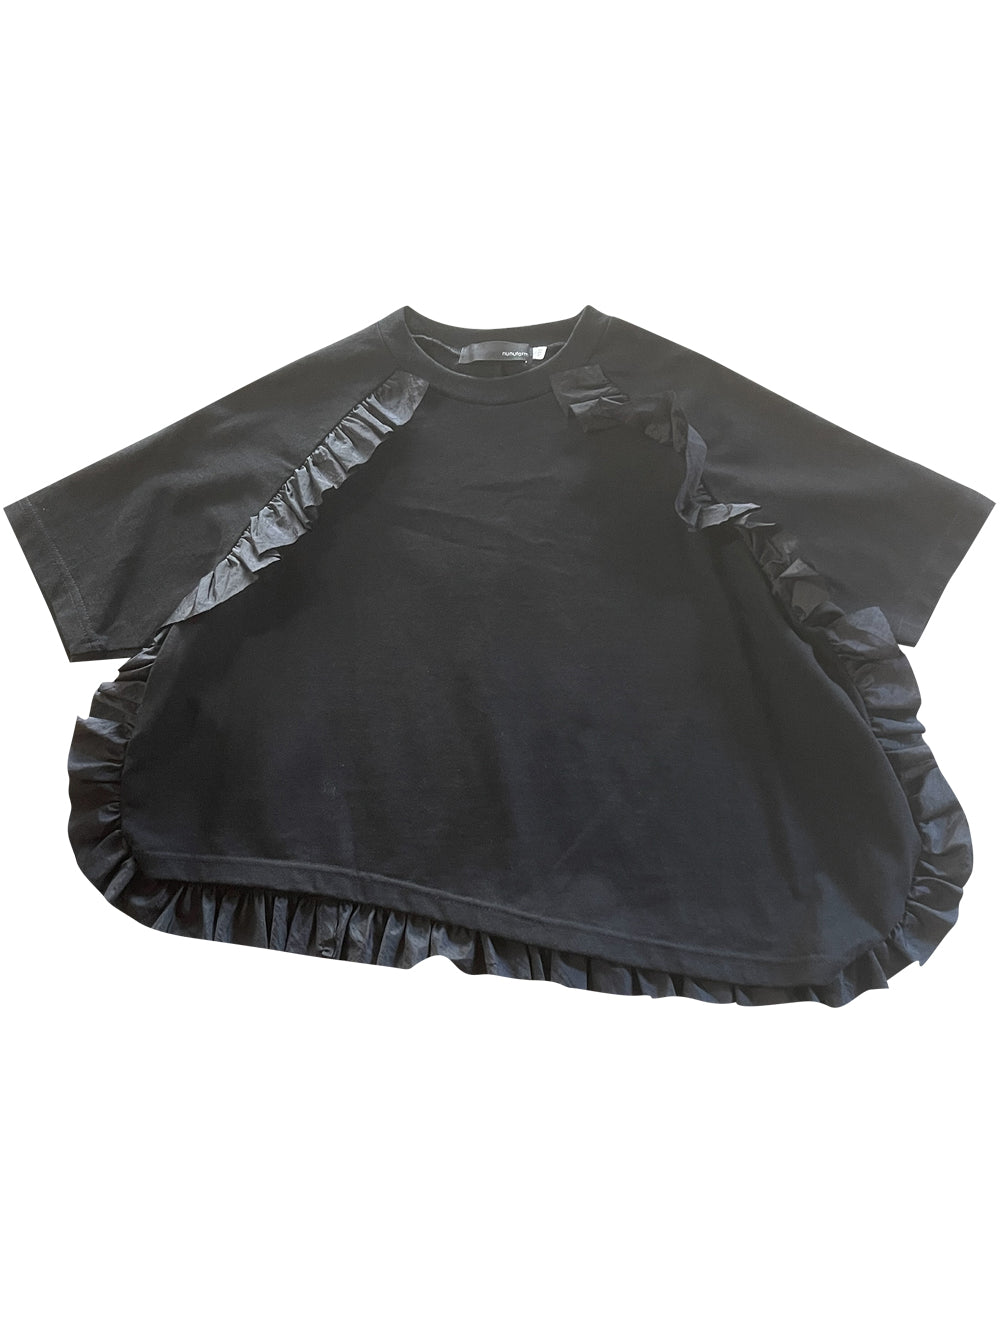 PREORDER: Black  Ruffled Edge T-Shirt